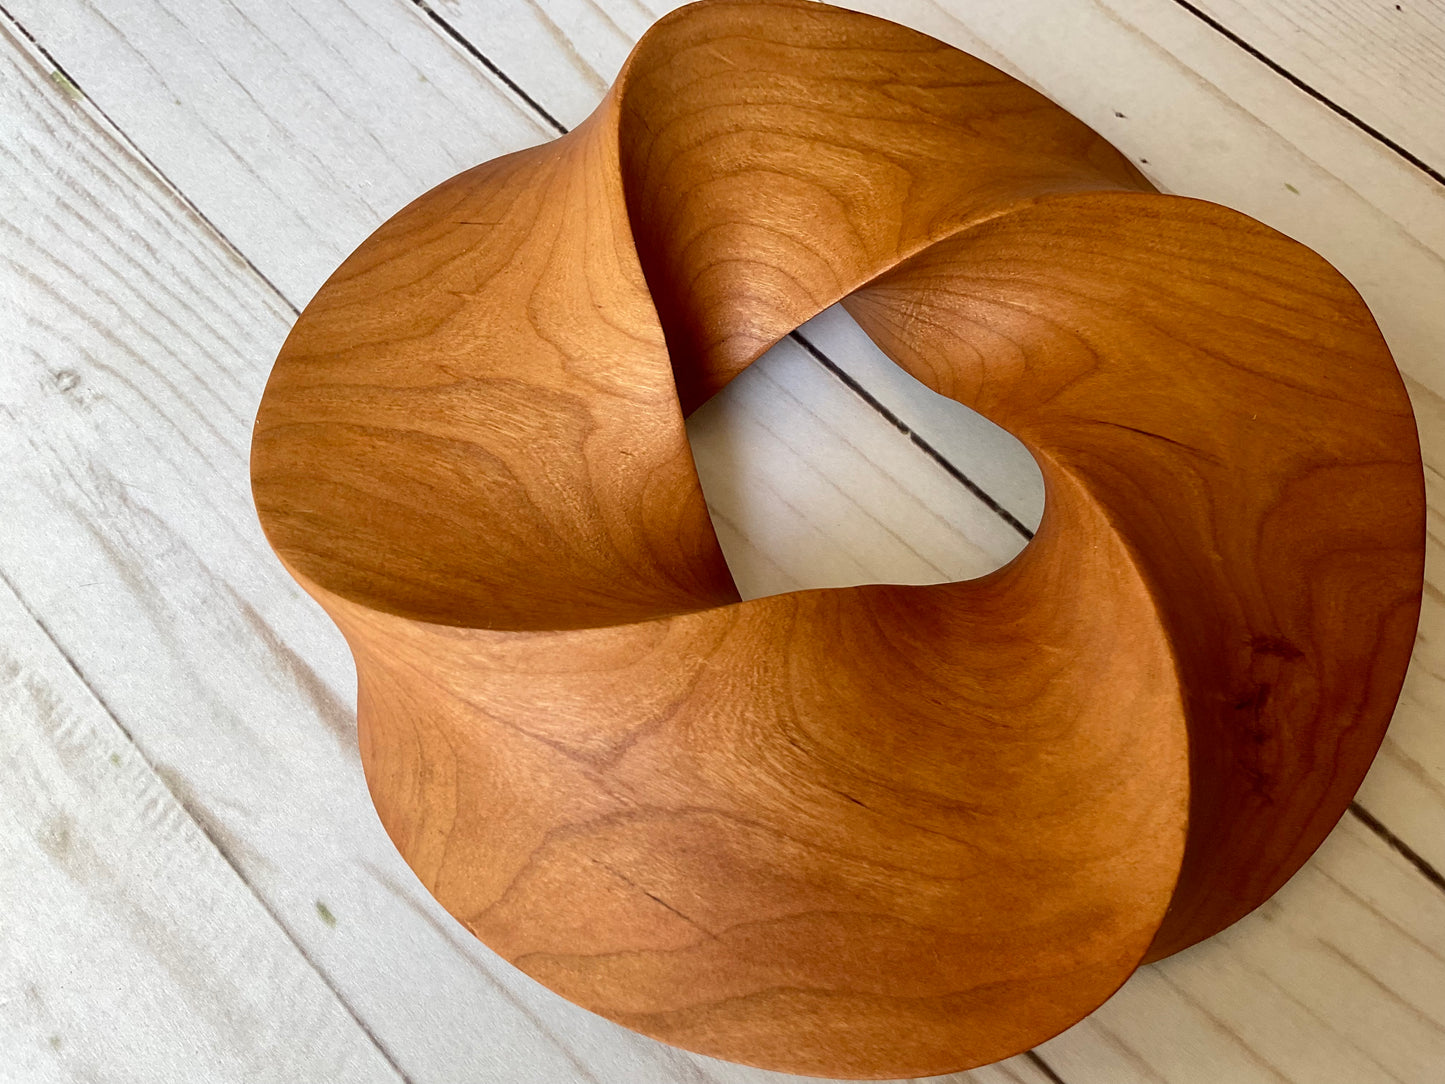 Quadruple-folded Möbius Strip-like Cherry Wood Carving, 7" diameter